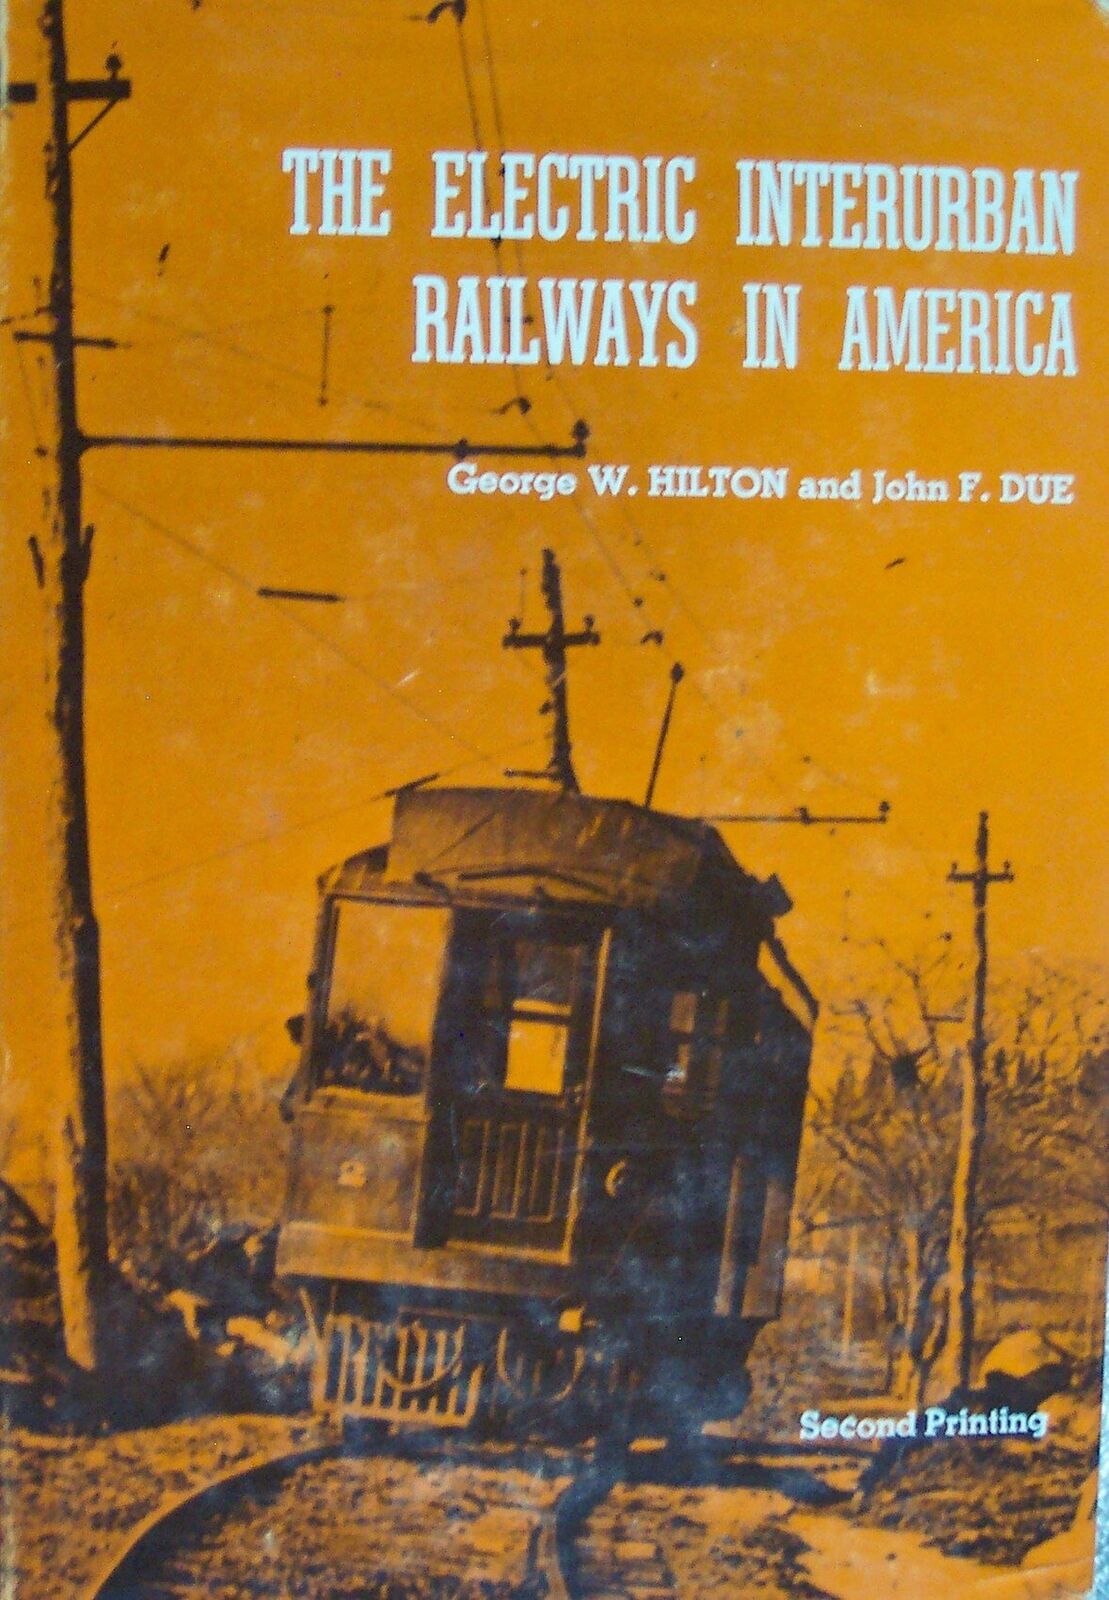 The electric interurban railways in America